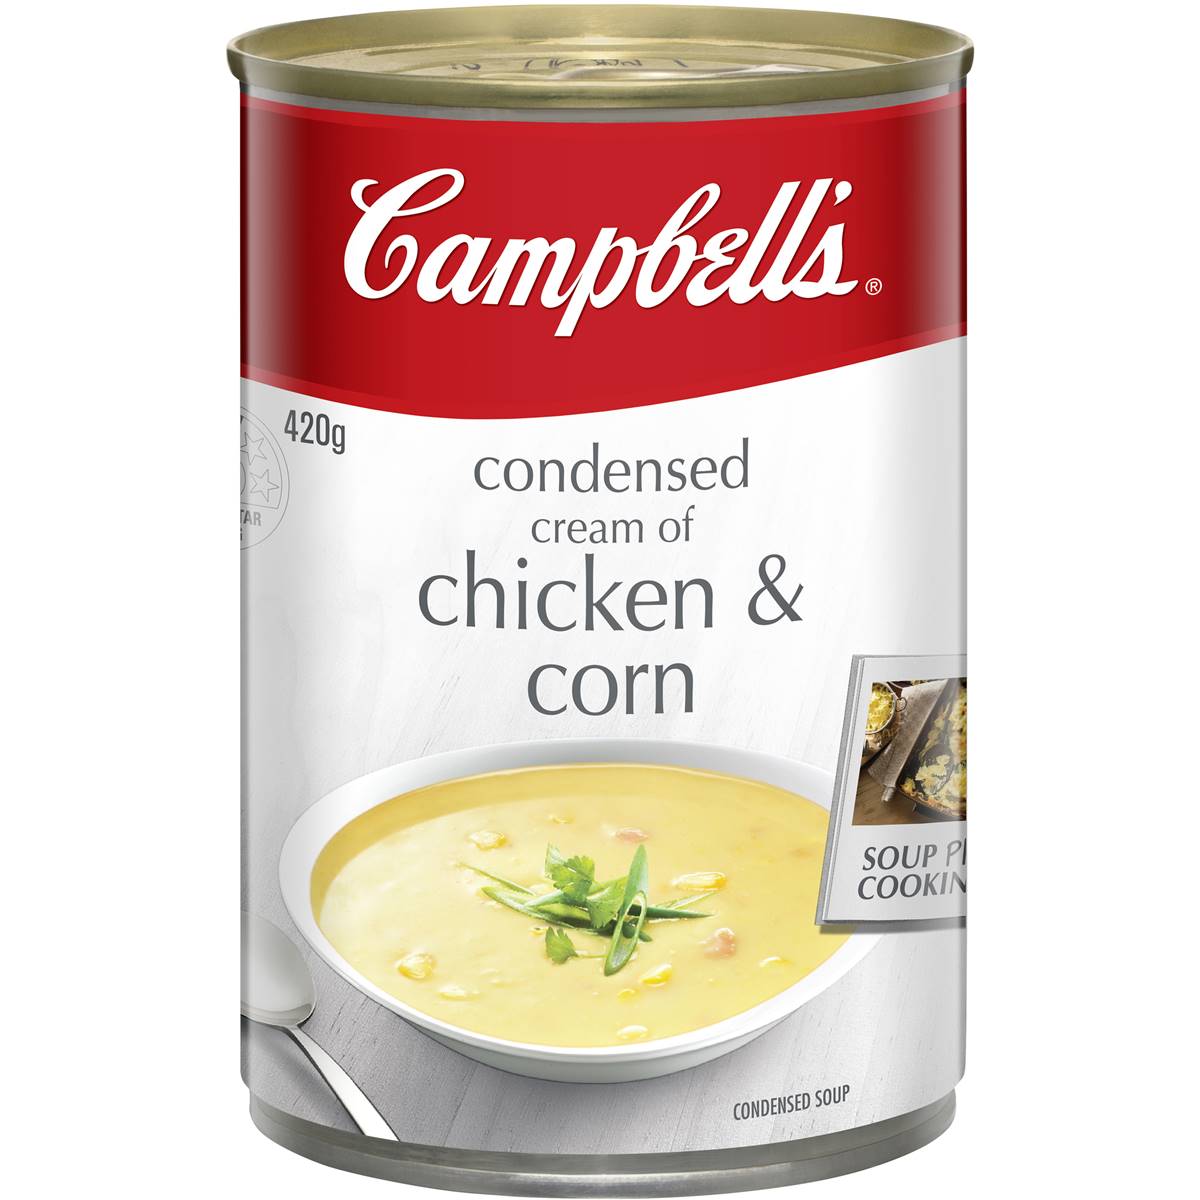 Campbells Condensed Soup Cream of Chicken & Corn 420g *